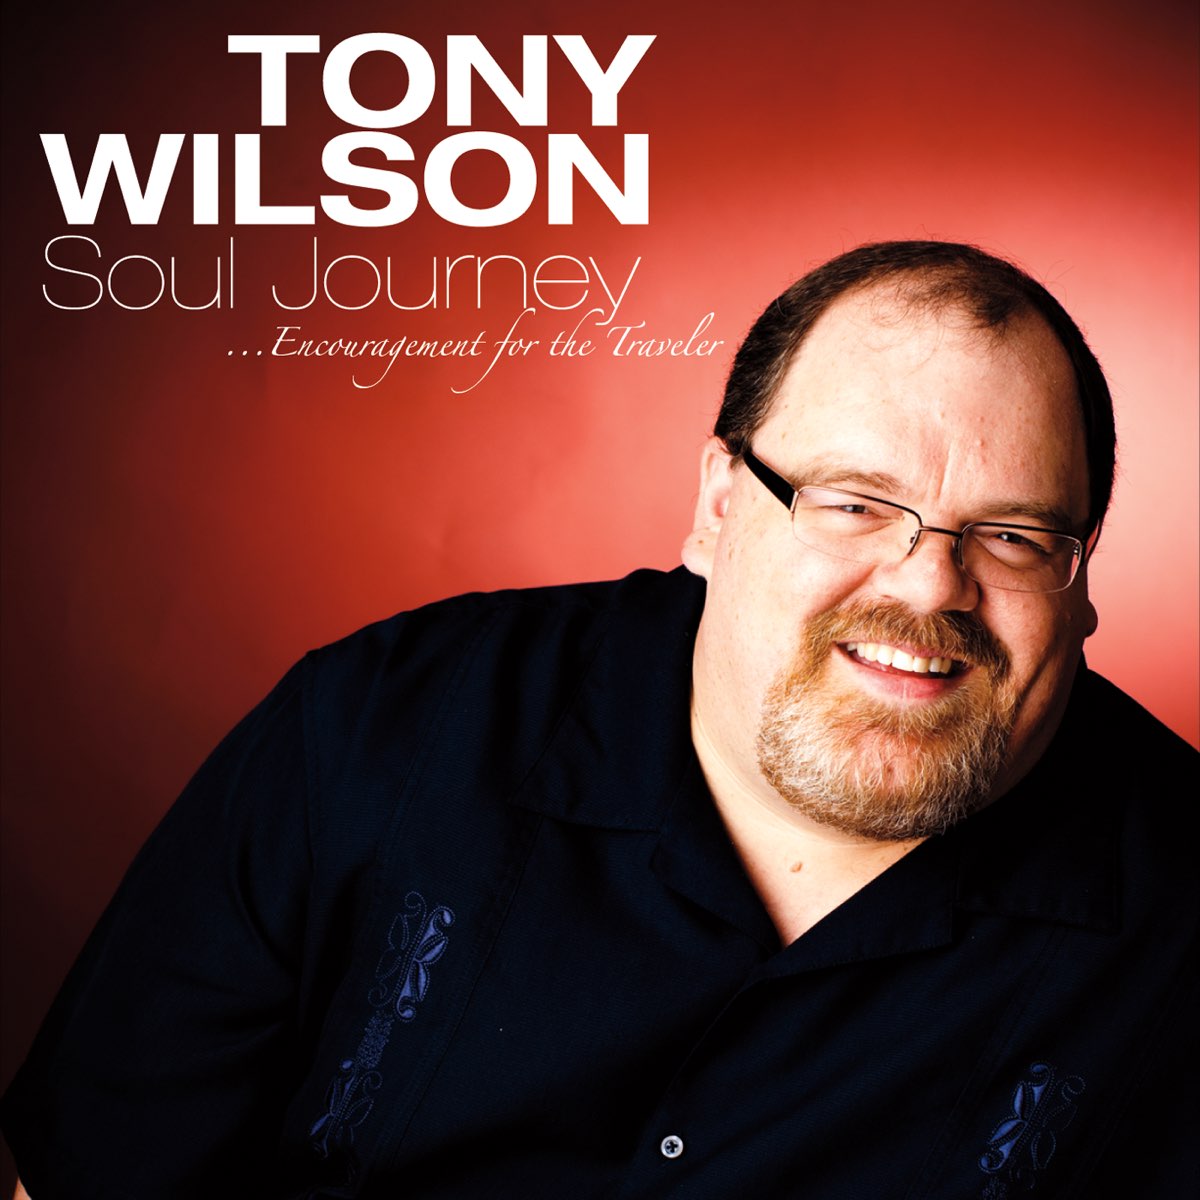 Soul journey. Tony Wilson.